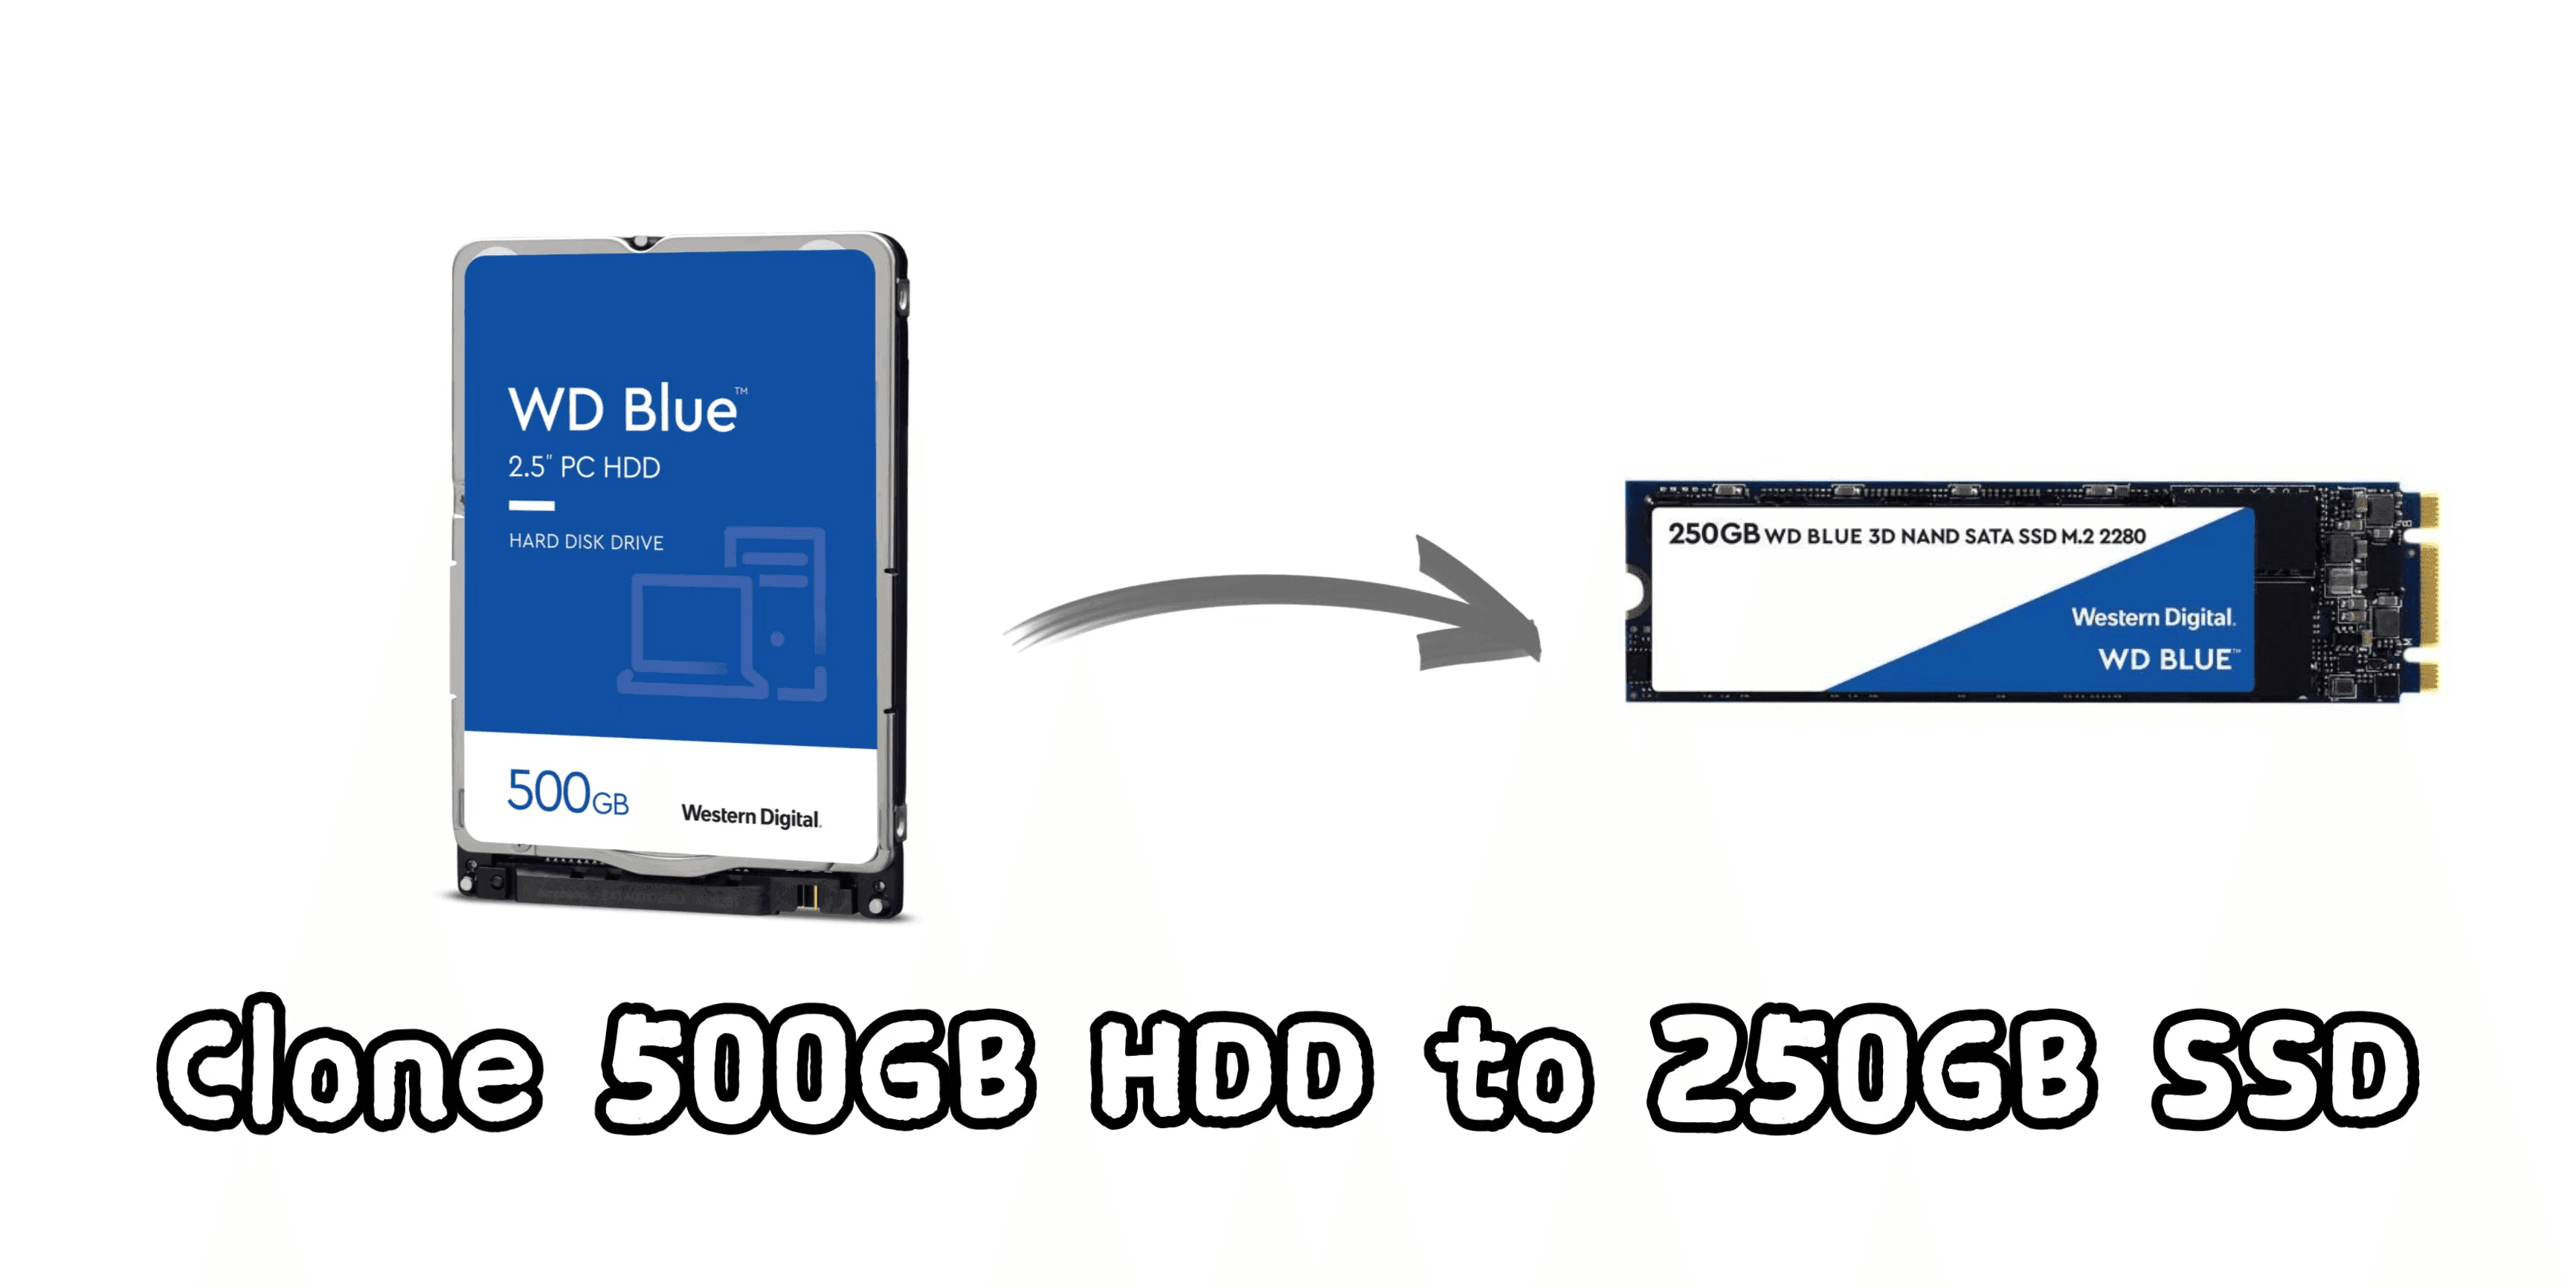 Clone 500GB HDD to 250GB SSD